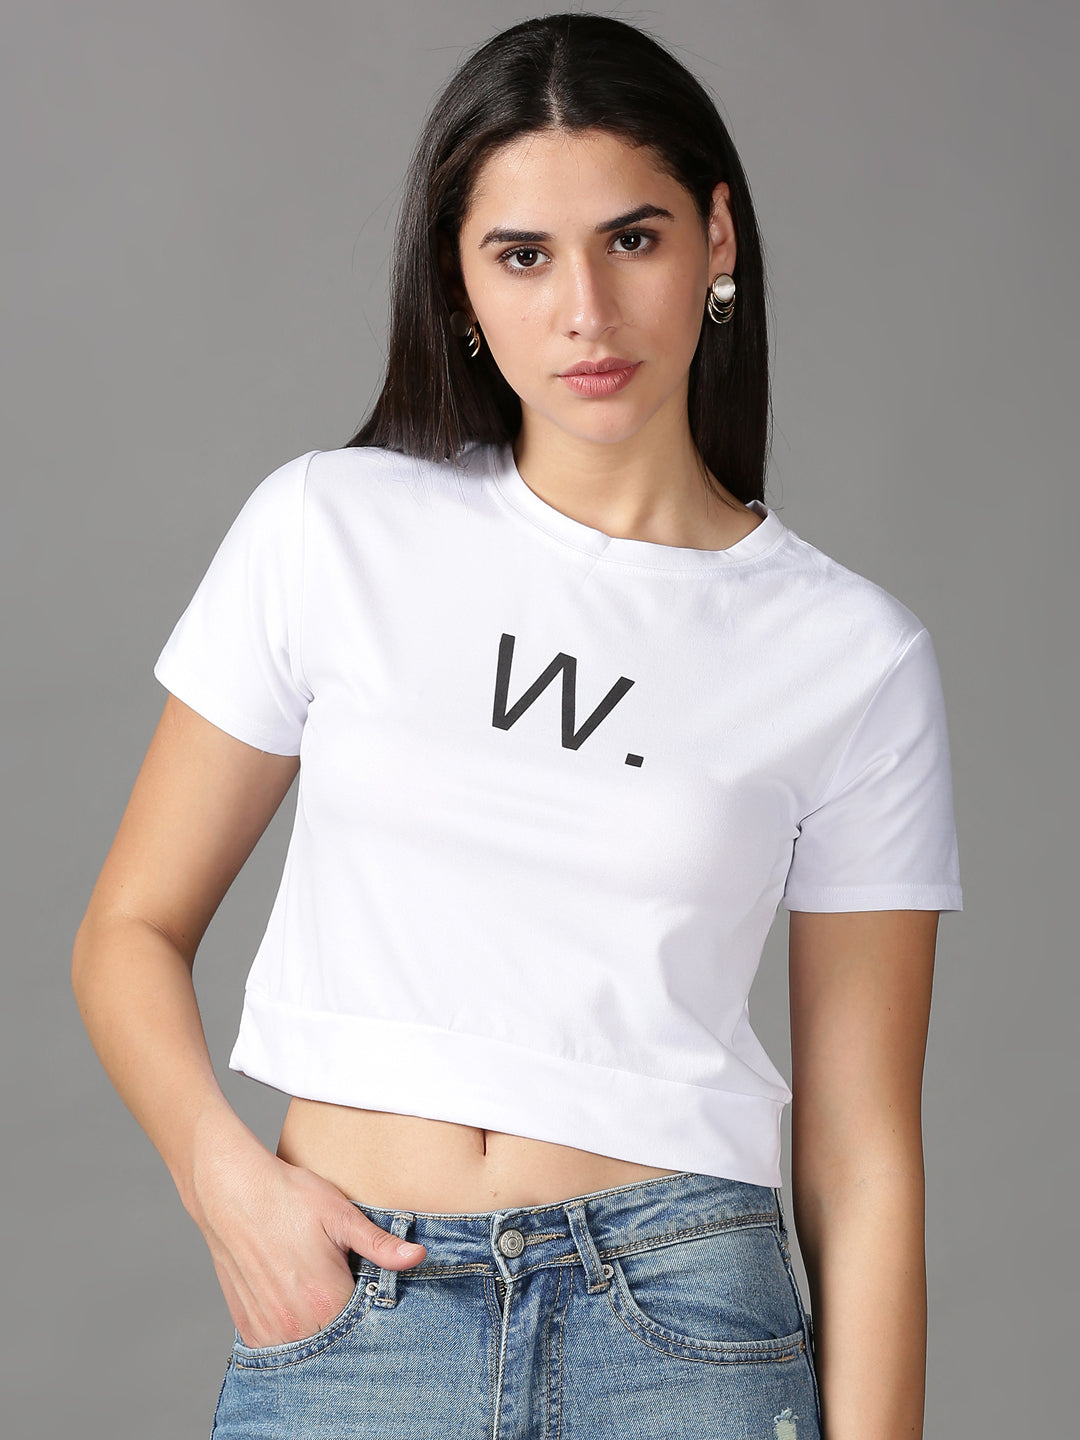 Women's White Solid Crop Top